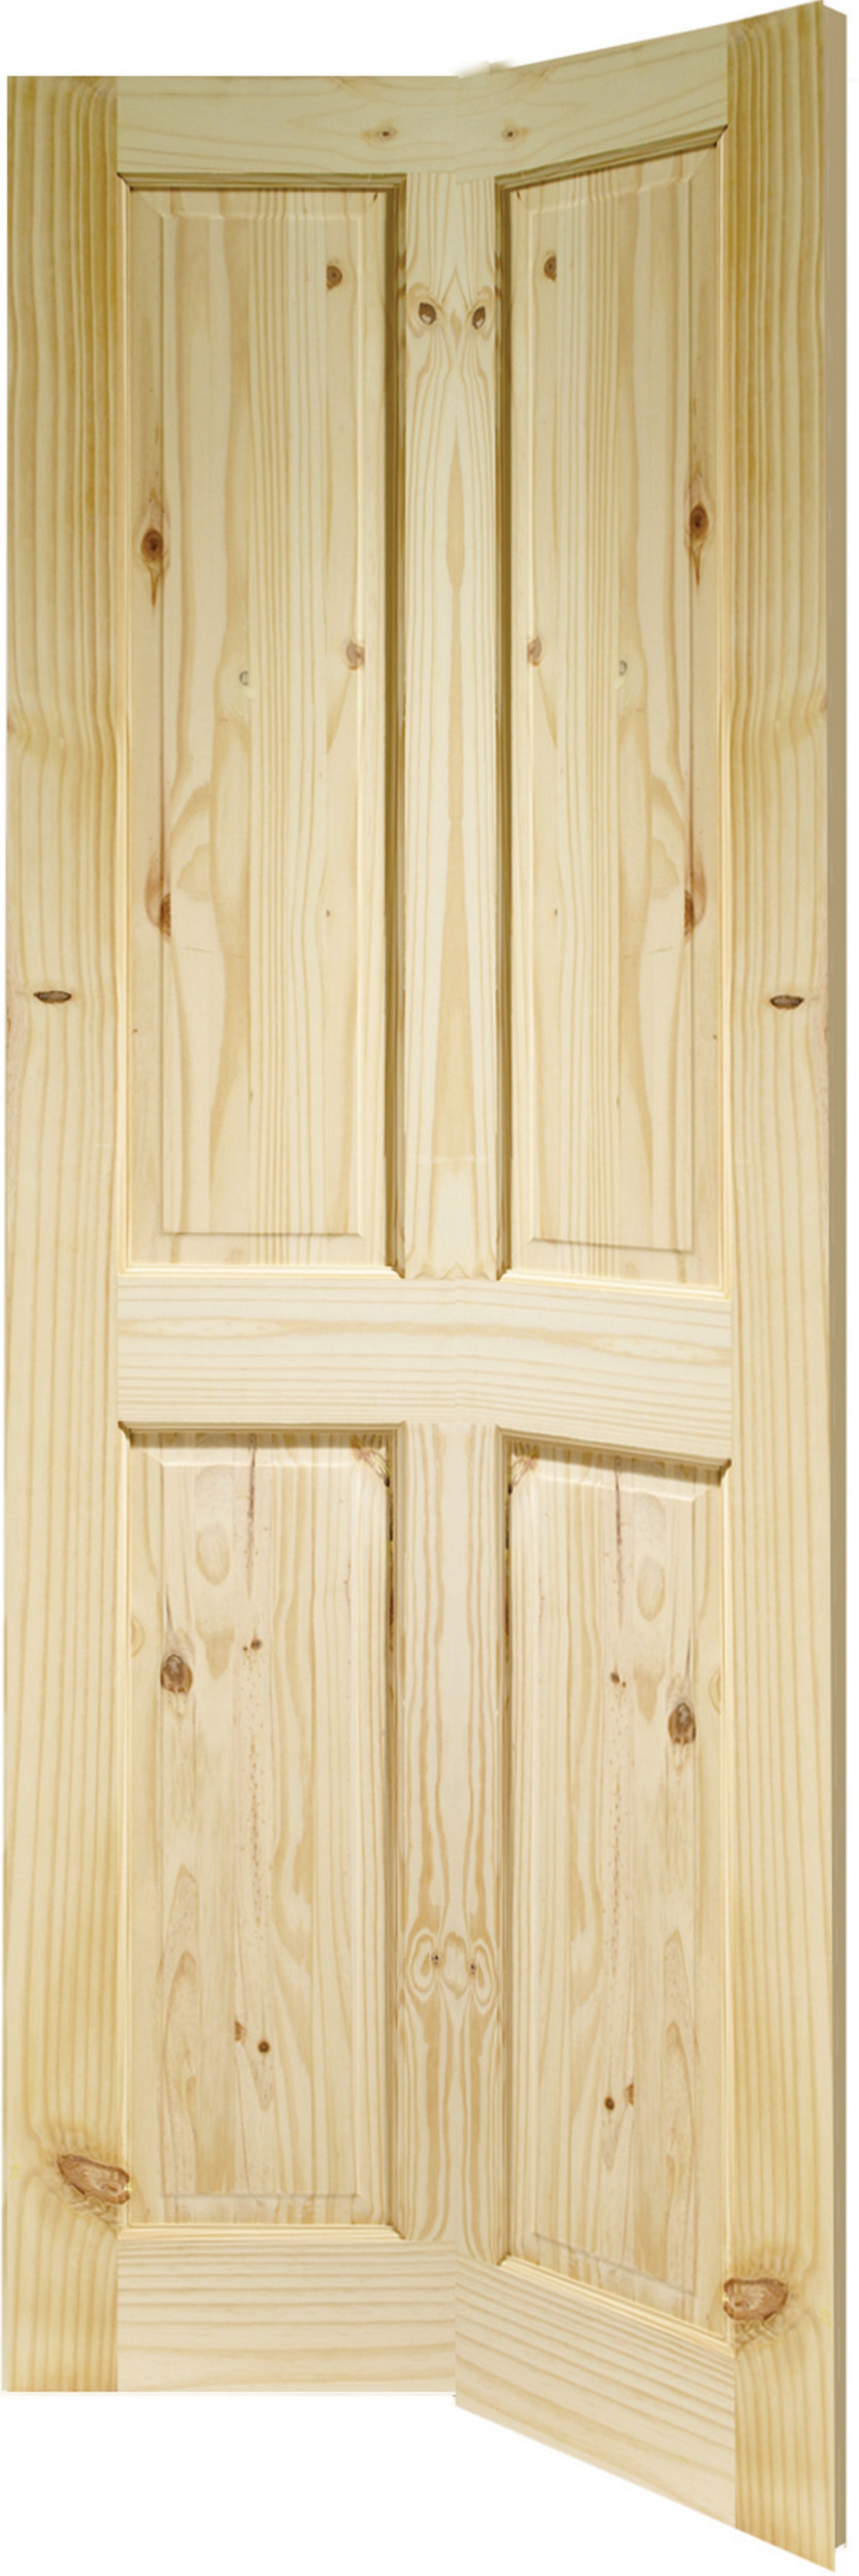 Image of Wickes Chester Knotty Pine 4 Panel Internal Bi-Fold Door - 1981 x 686mm